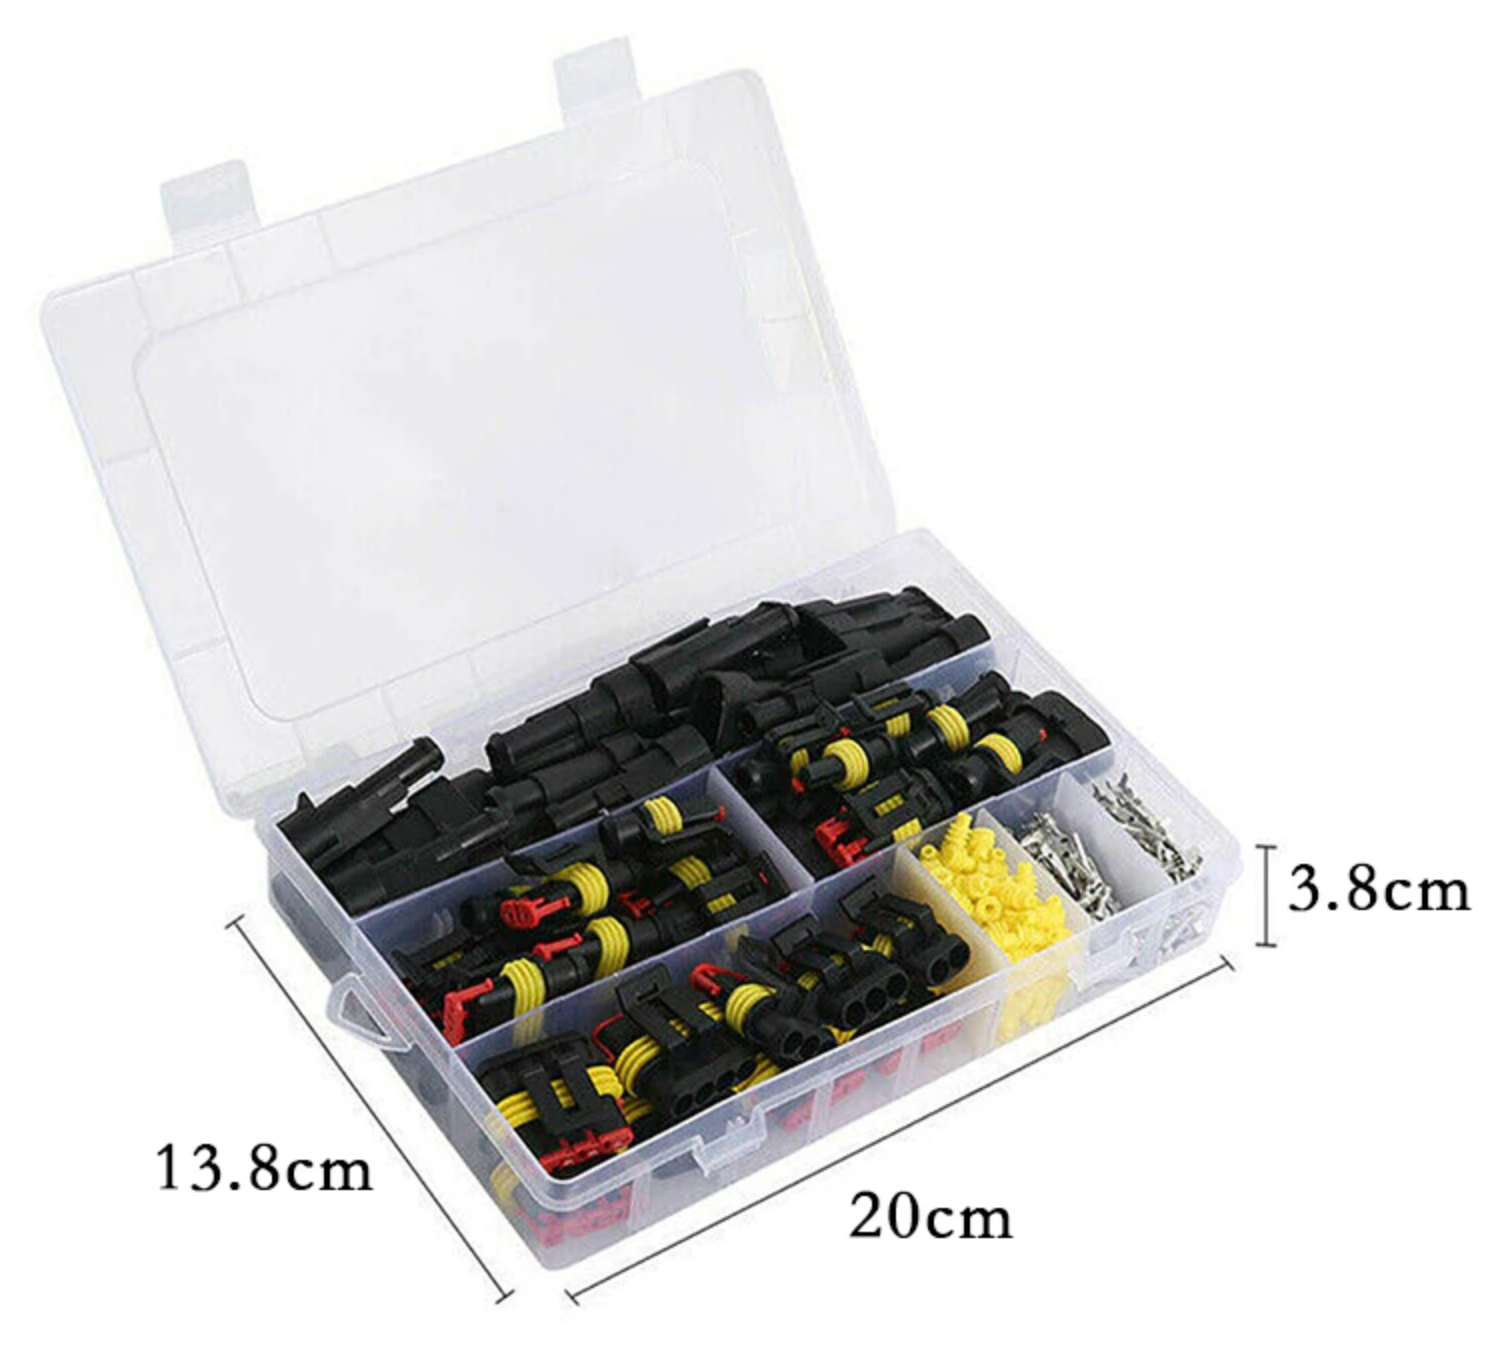 352pcs waterproof IP68 connector automotive kit